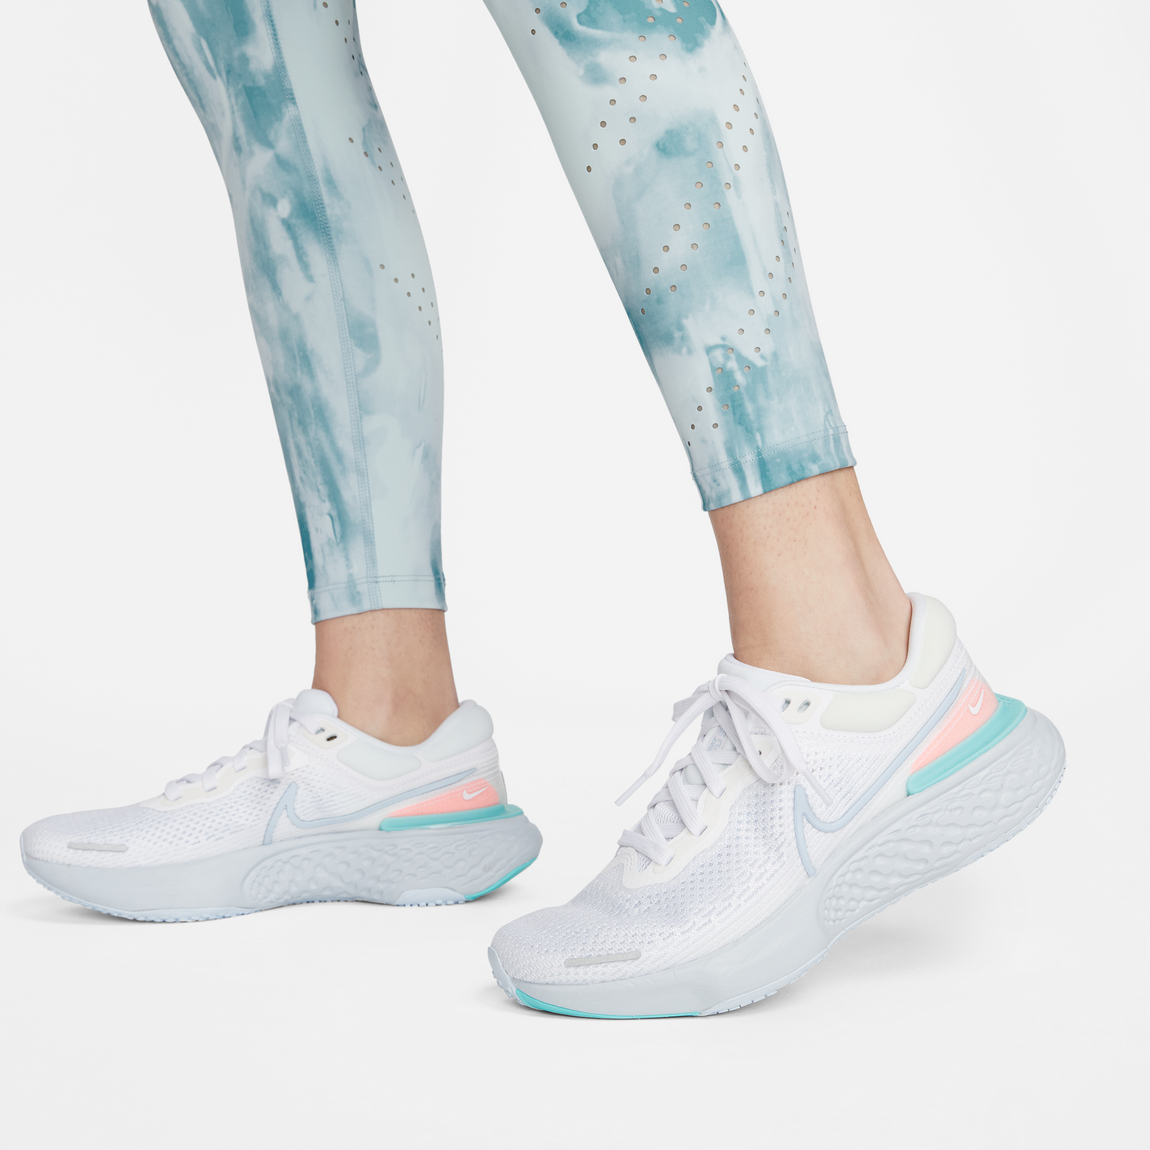 Nike Women's Epic Luxe 7/8 Pocket Running Leggings (Boarder Blue/Ashen Slate/Reflective Silver) - Nike Women's Epic Luxe 7/8 Pocket Running Leggings (Boarder Blue/Ashen Slate/Reflective Silver) - 